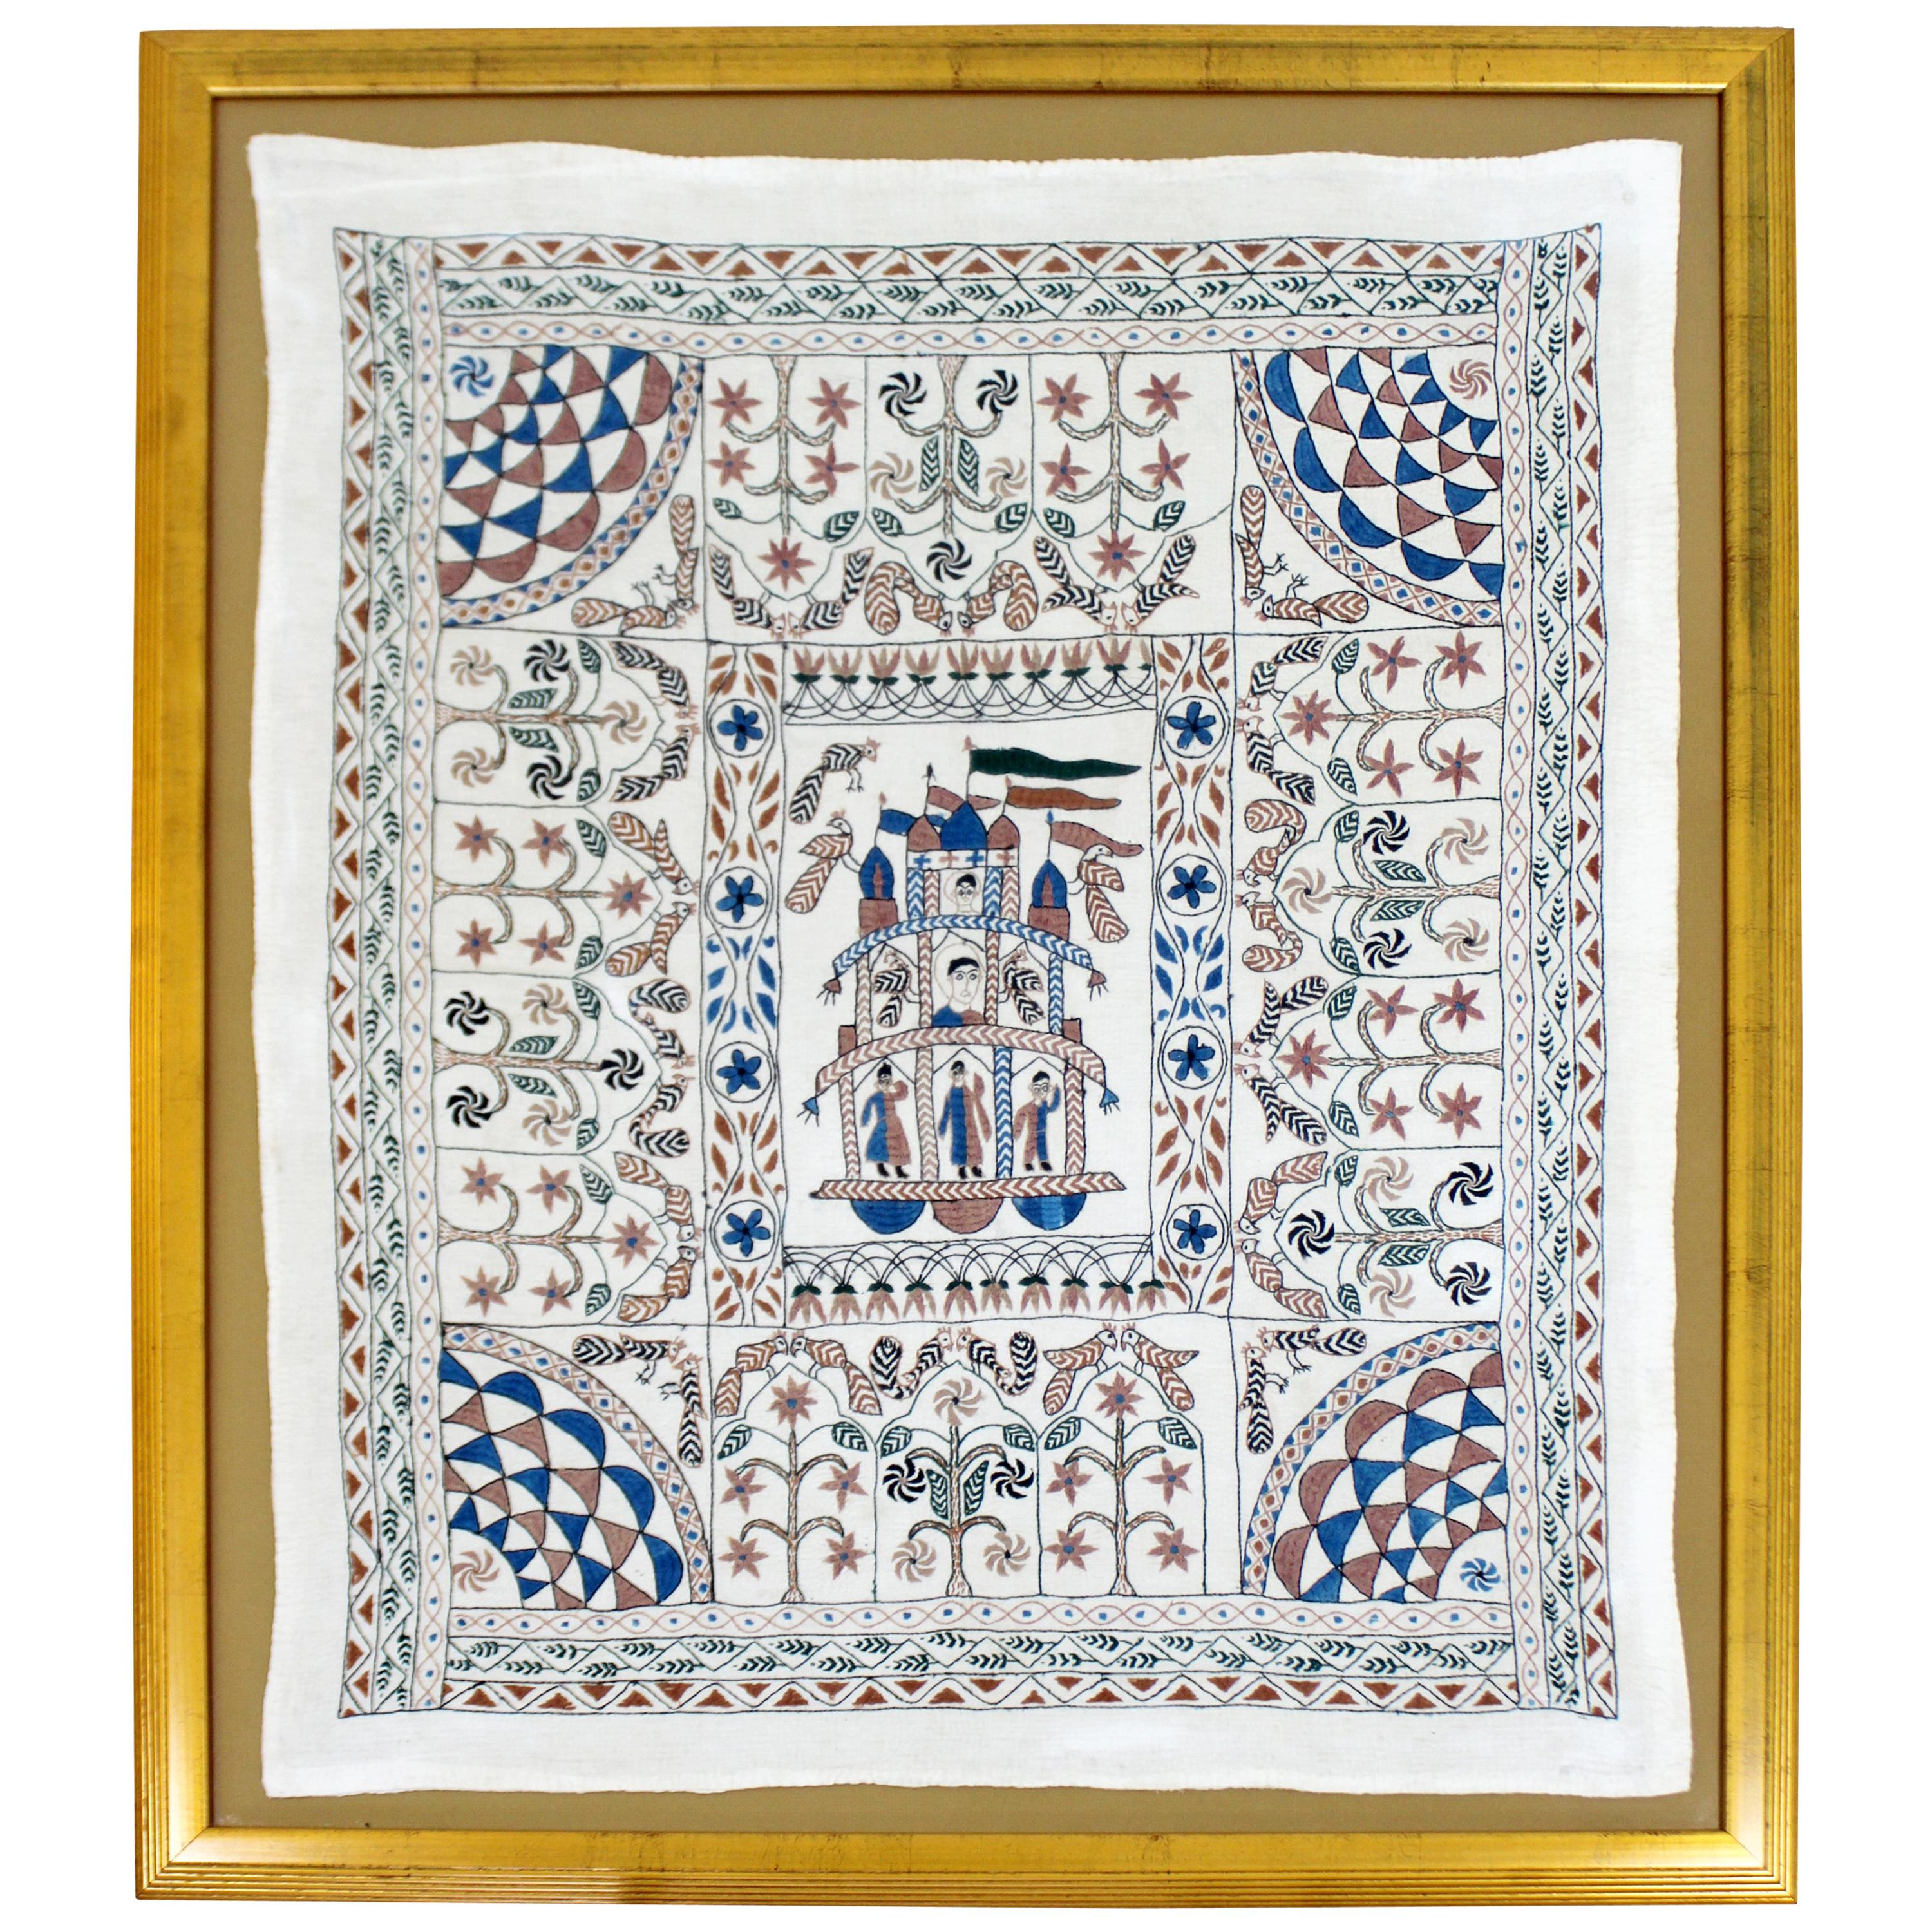 Framed Decorative Ethnic Figurative Tapestry